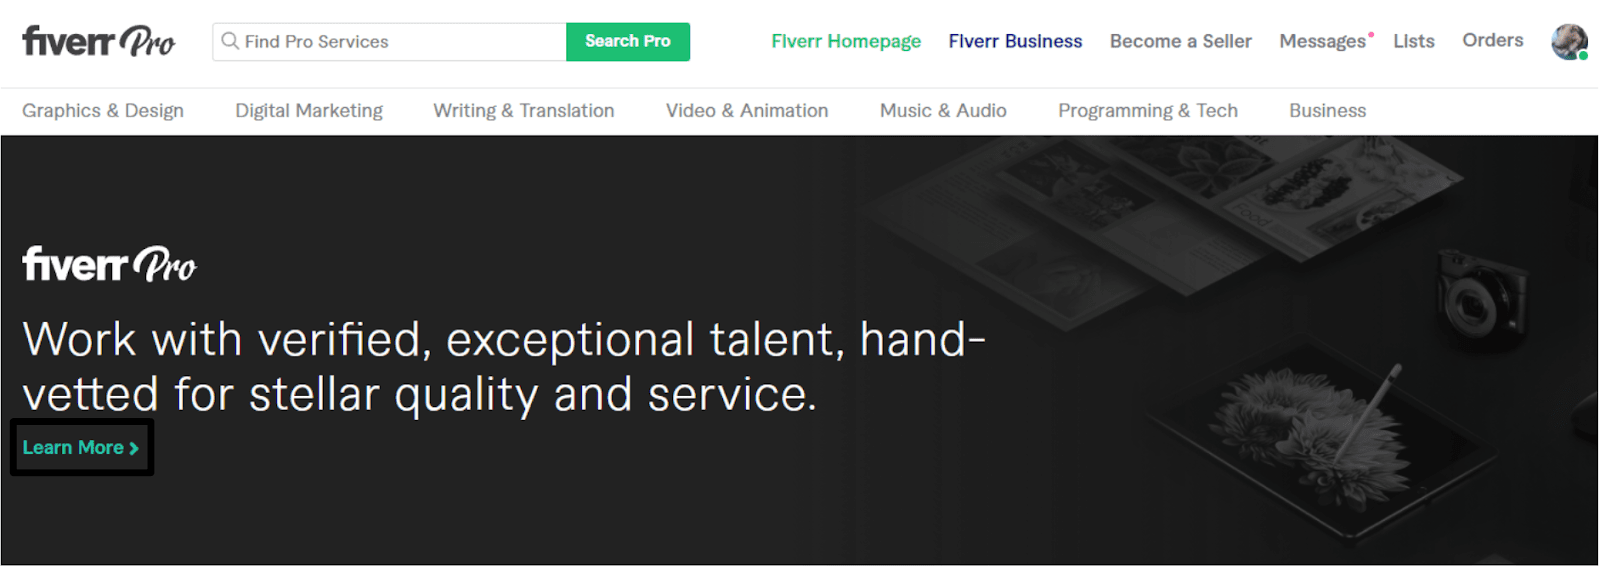 Fiverr Pro homepage